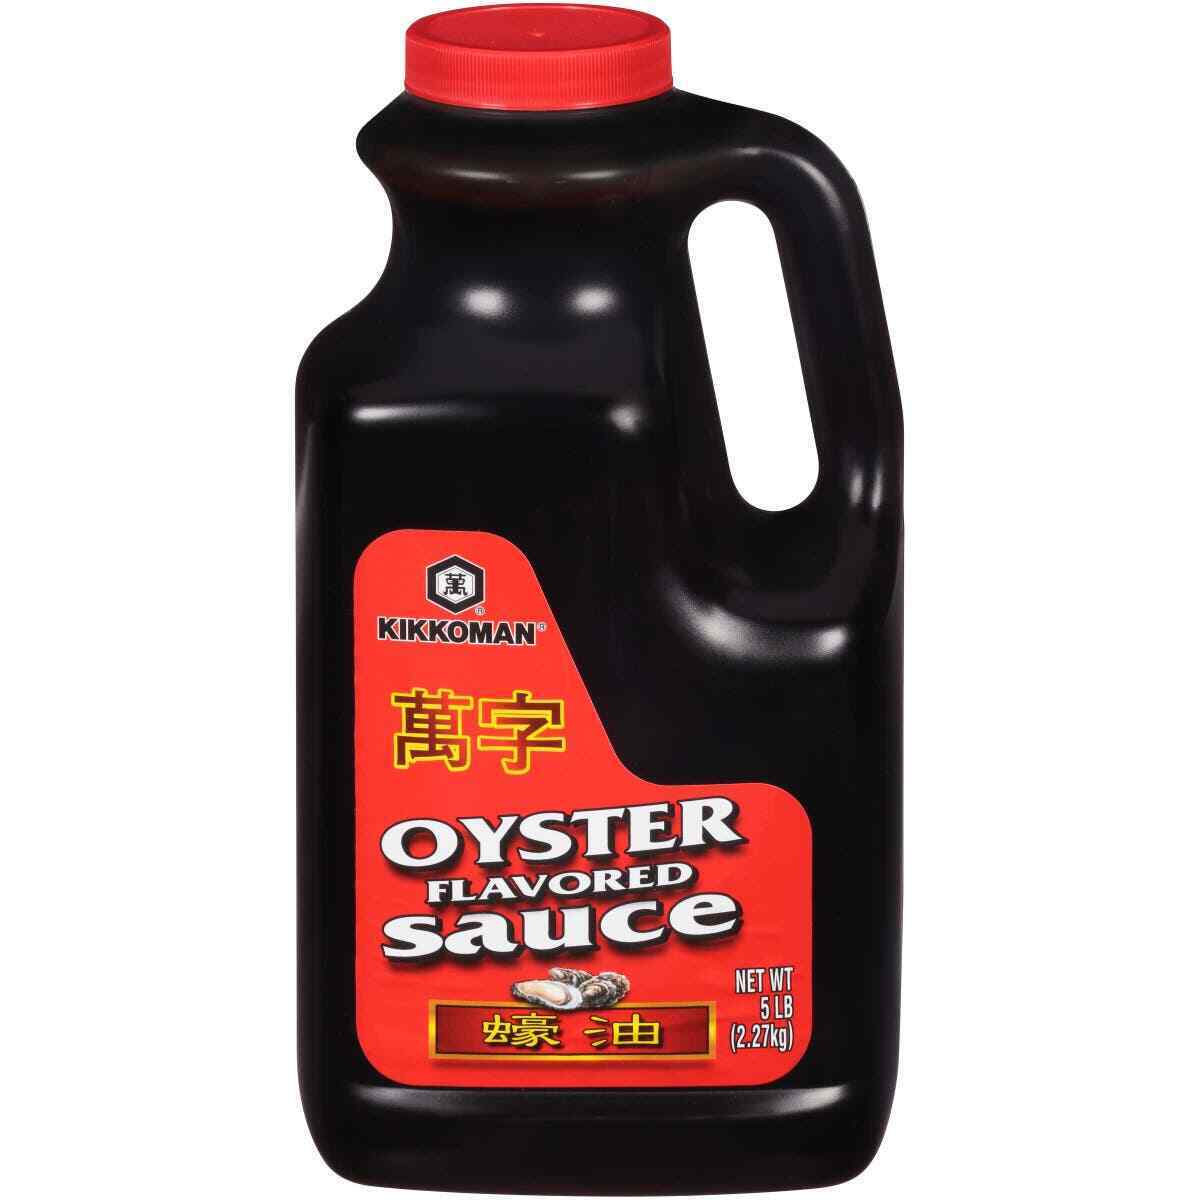 Kikkoman Oyster Flavored Sauce Red Label, 5 lb. Per Bottle